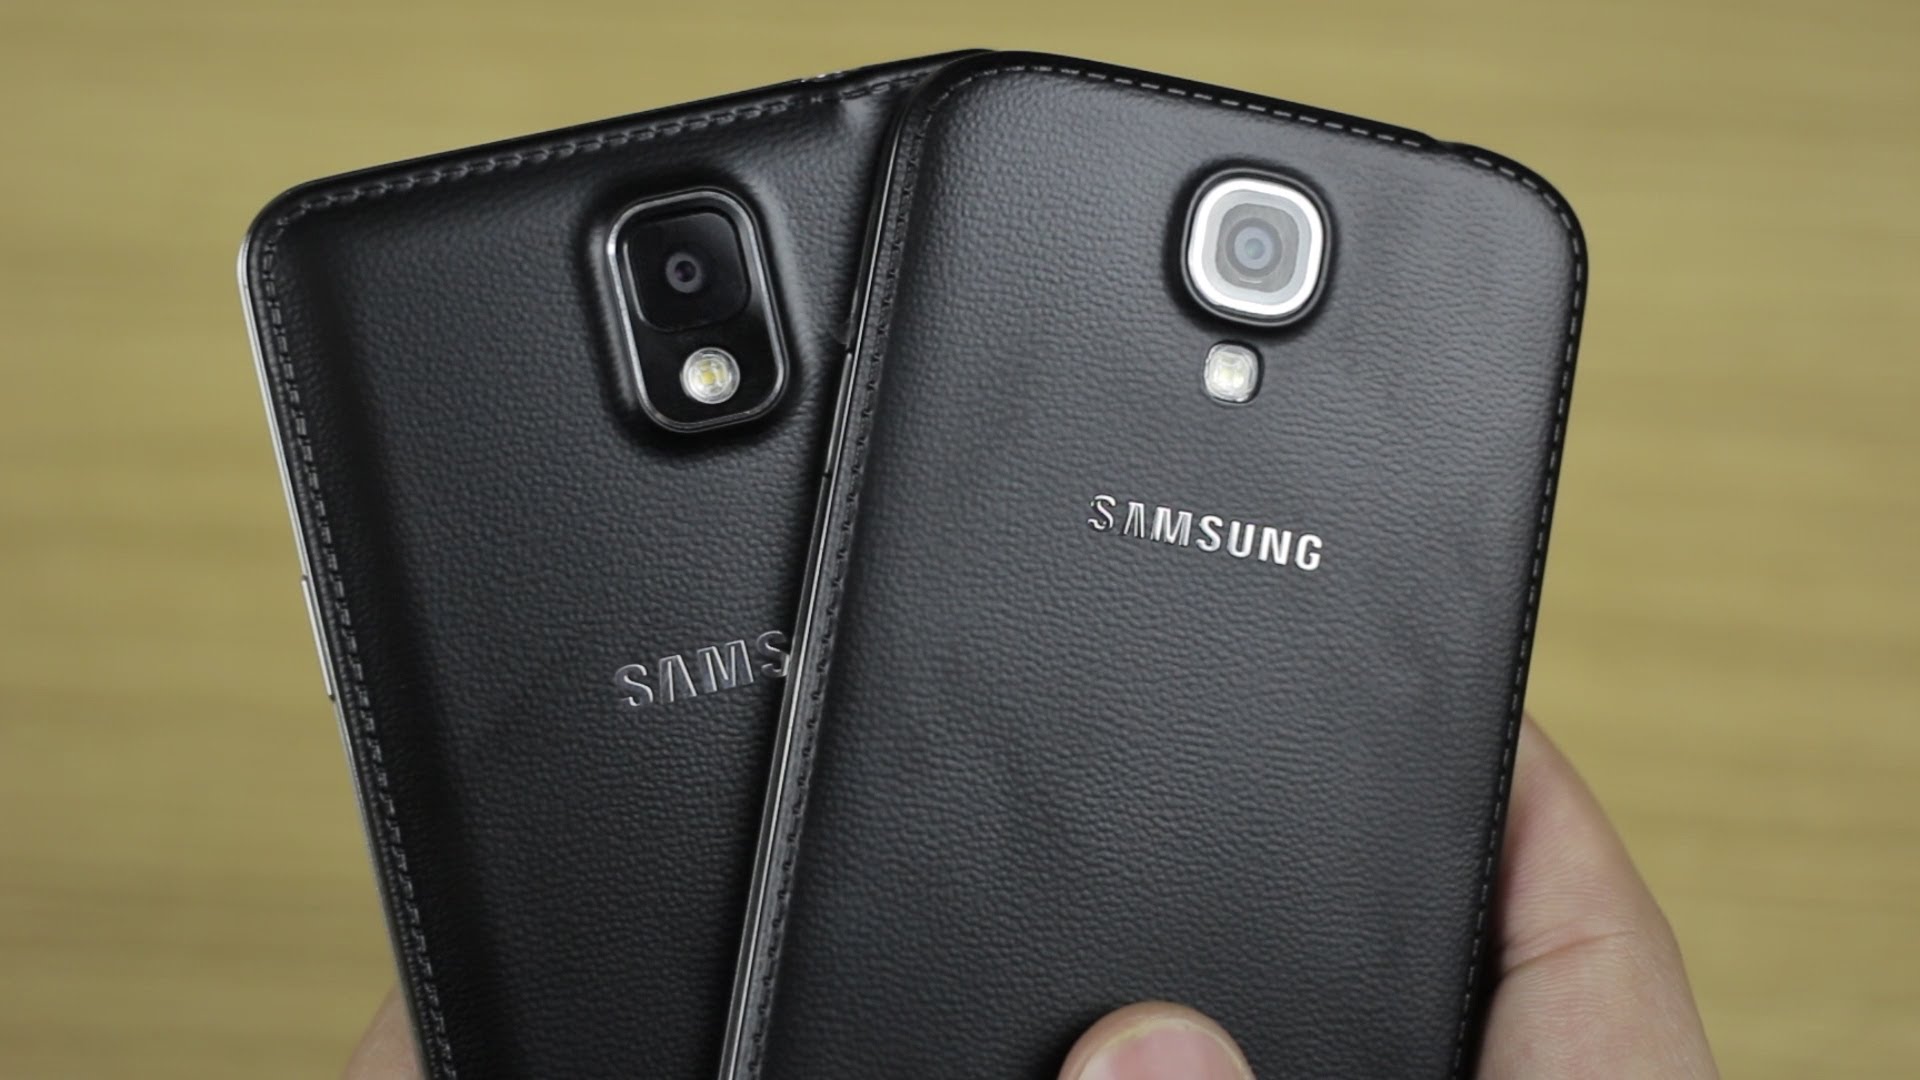 Samsung Galaxy S4 Black Edition: Με πλάτη από δερματίνη όπως το Note 3! Maxres11